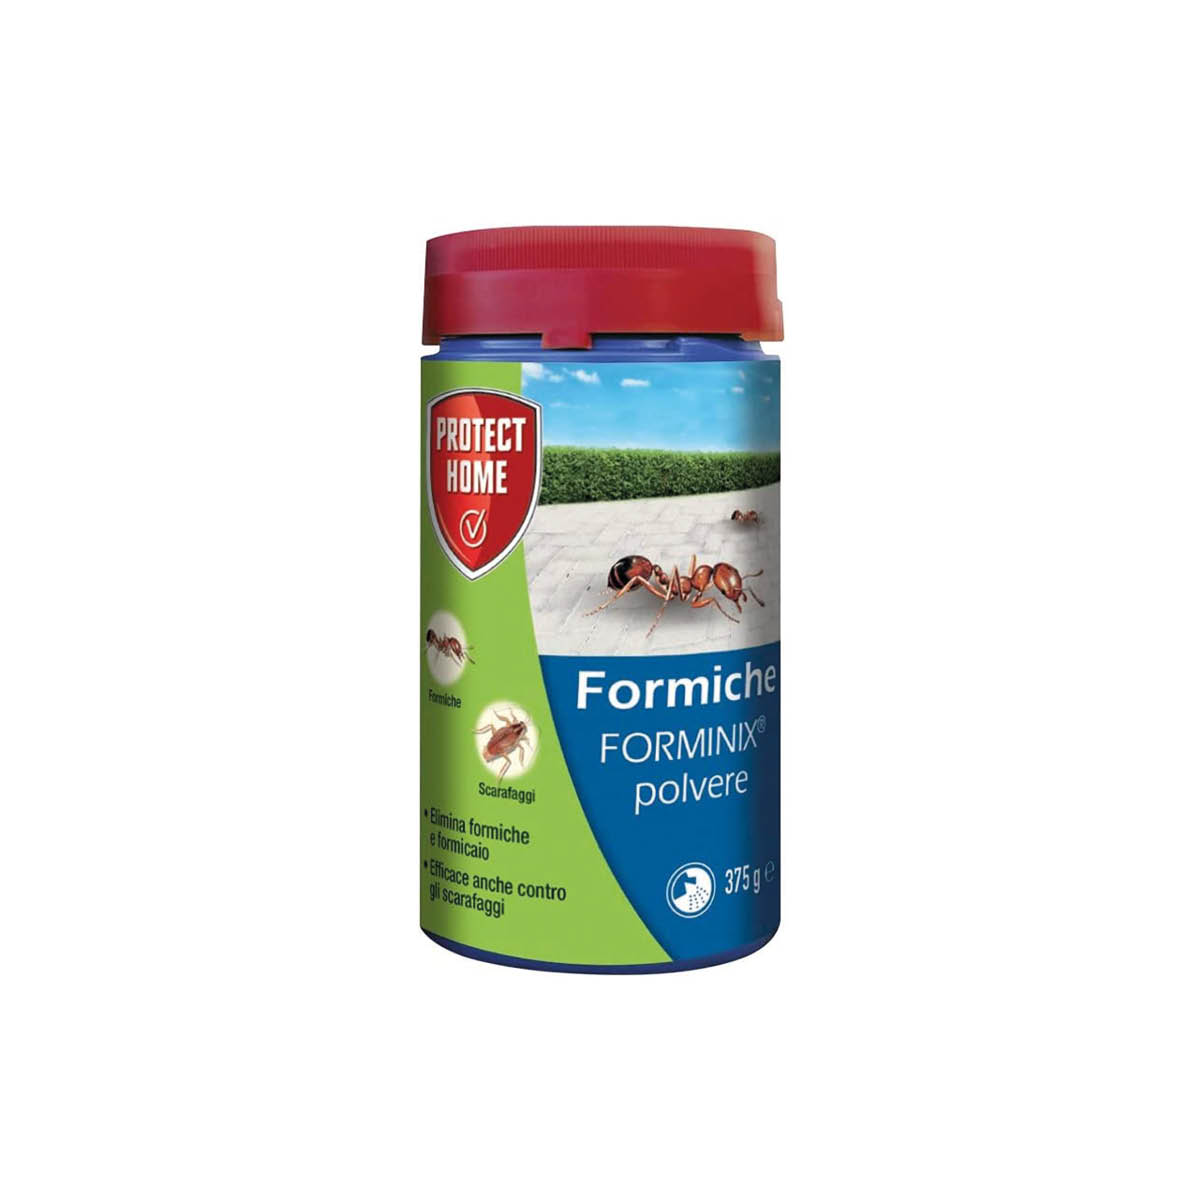 Protect Garden Forminix® formiche polvere